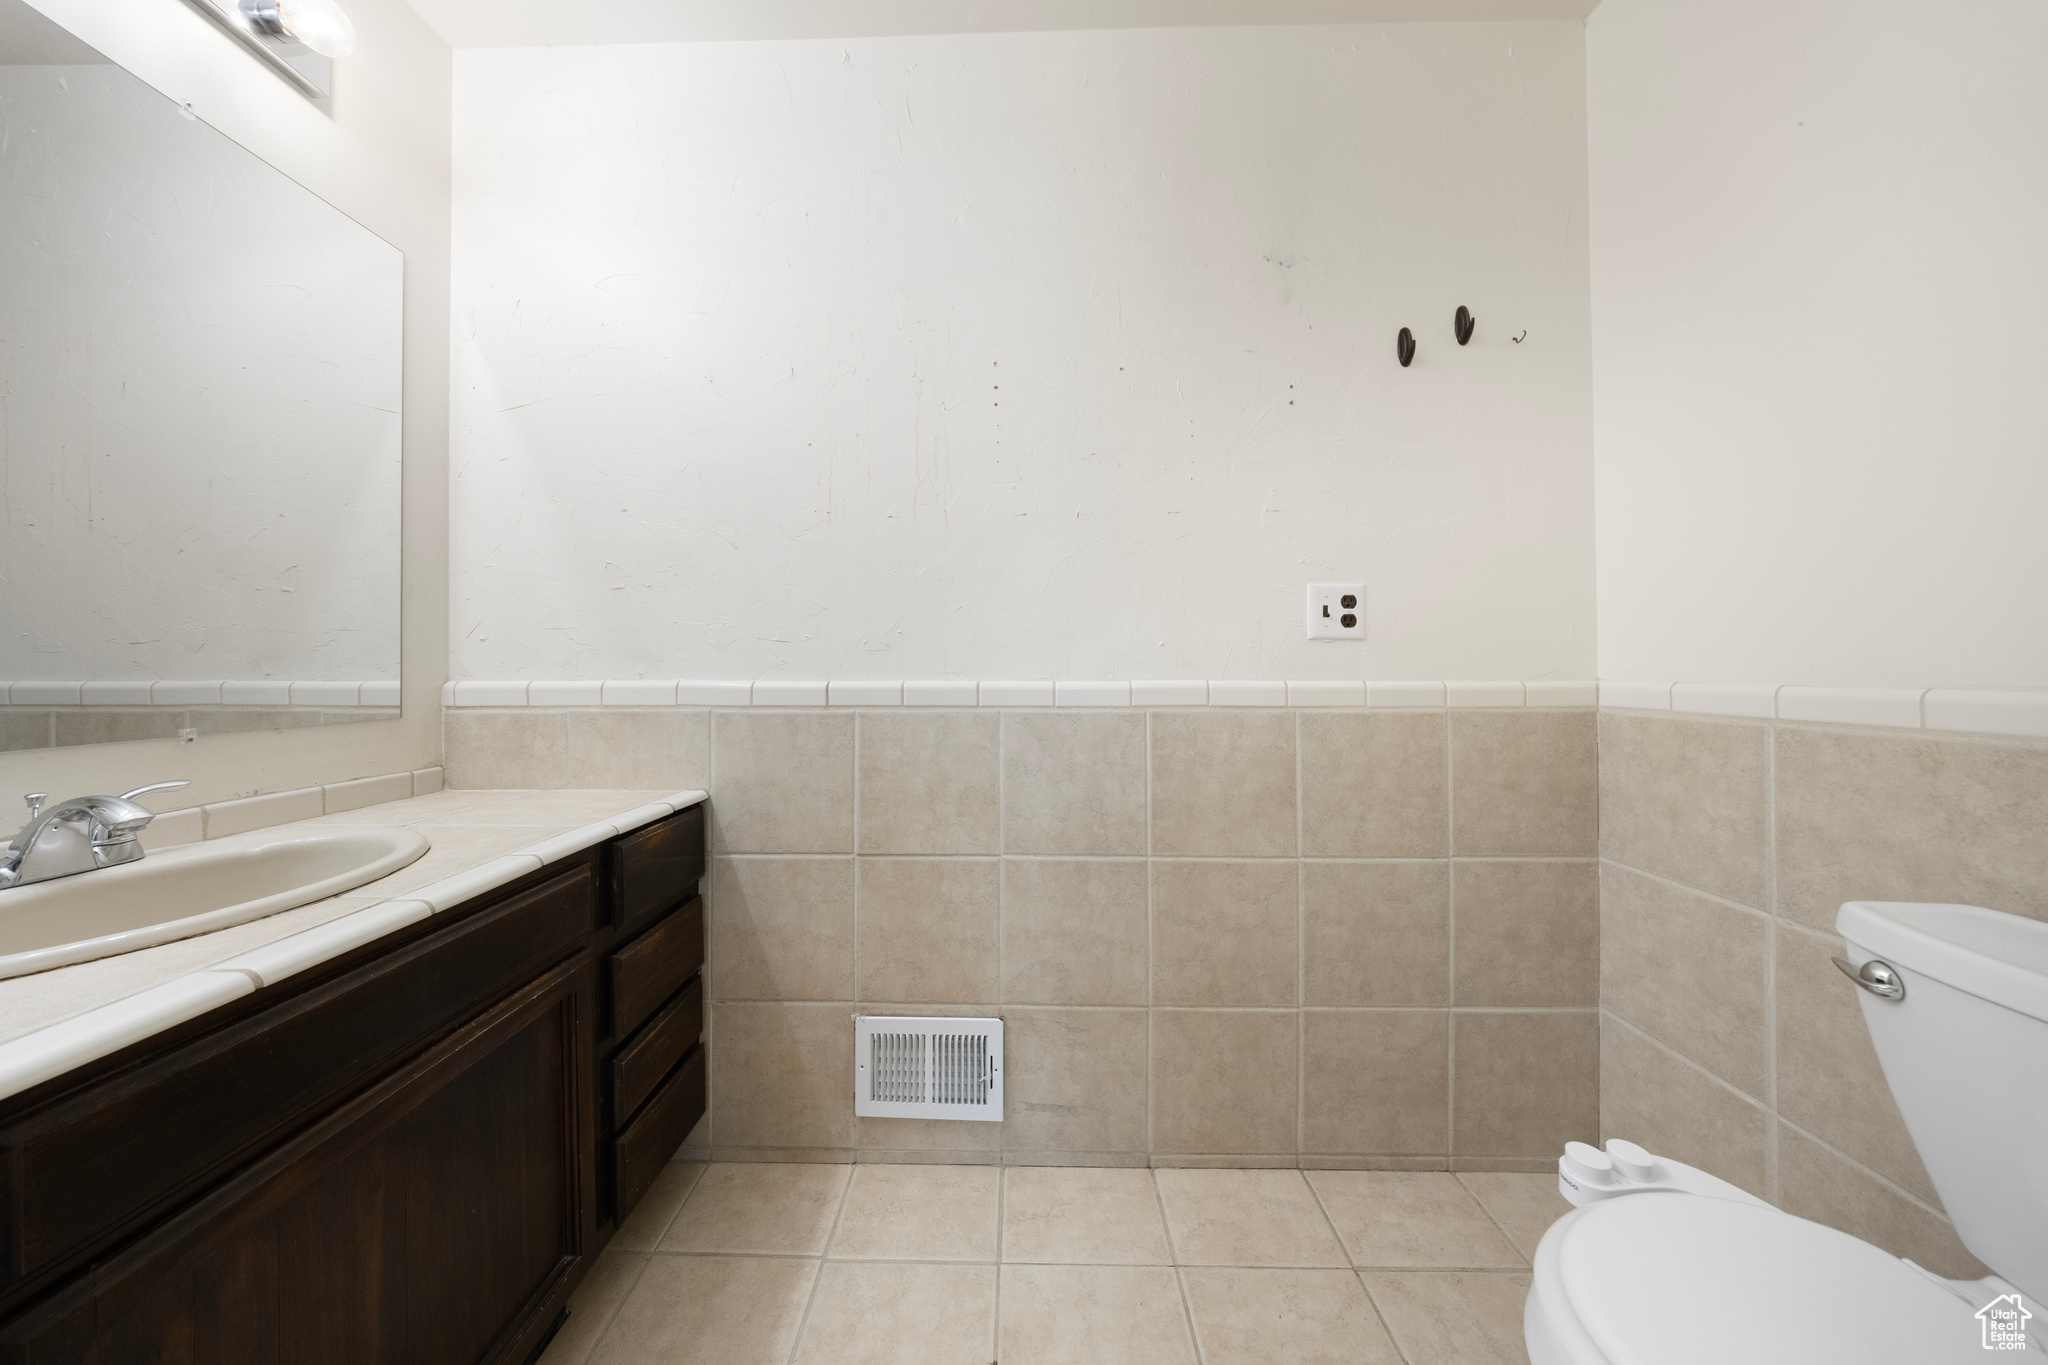 Bathroom featuring vanity, toilet, tile floors, and tile walls